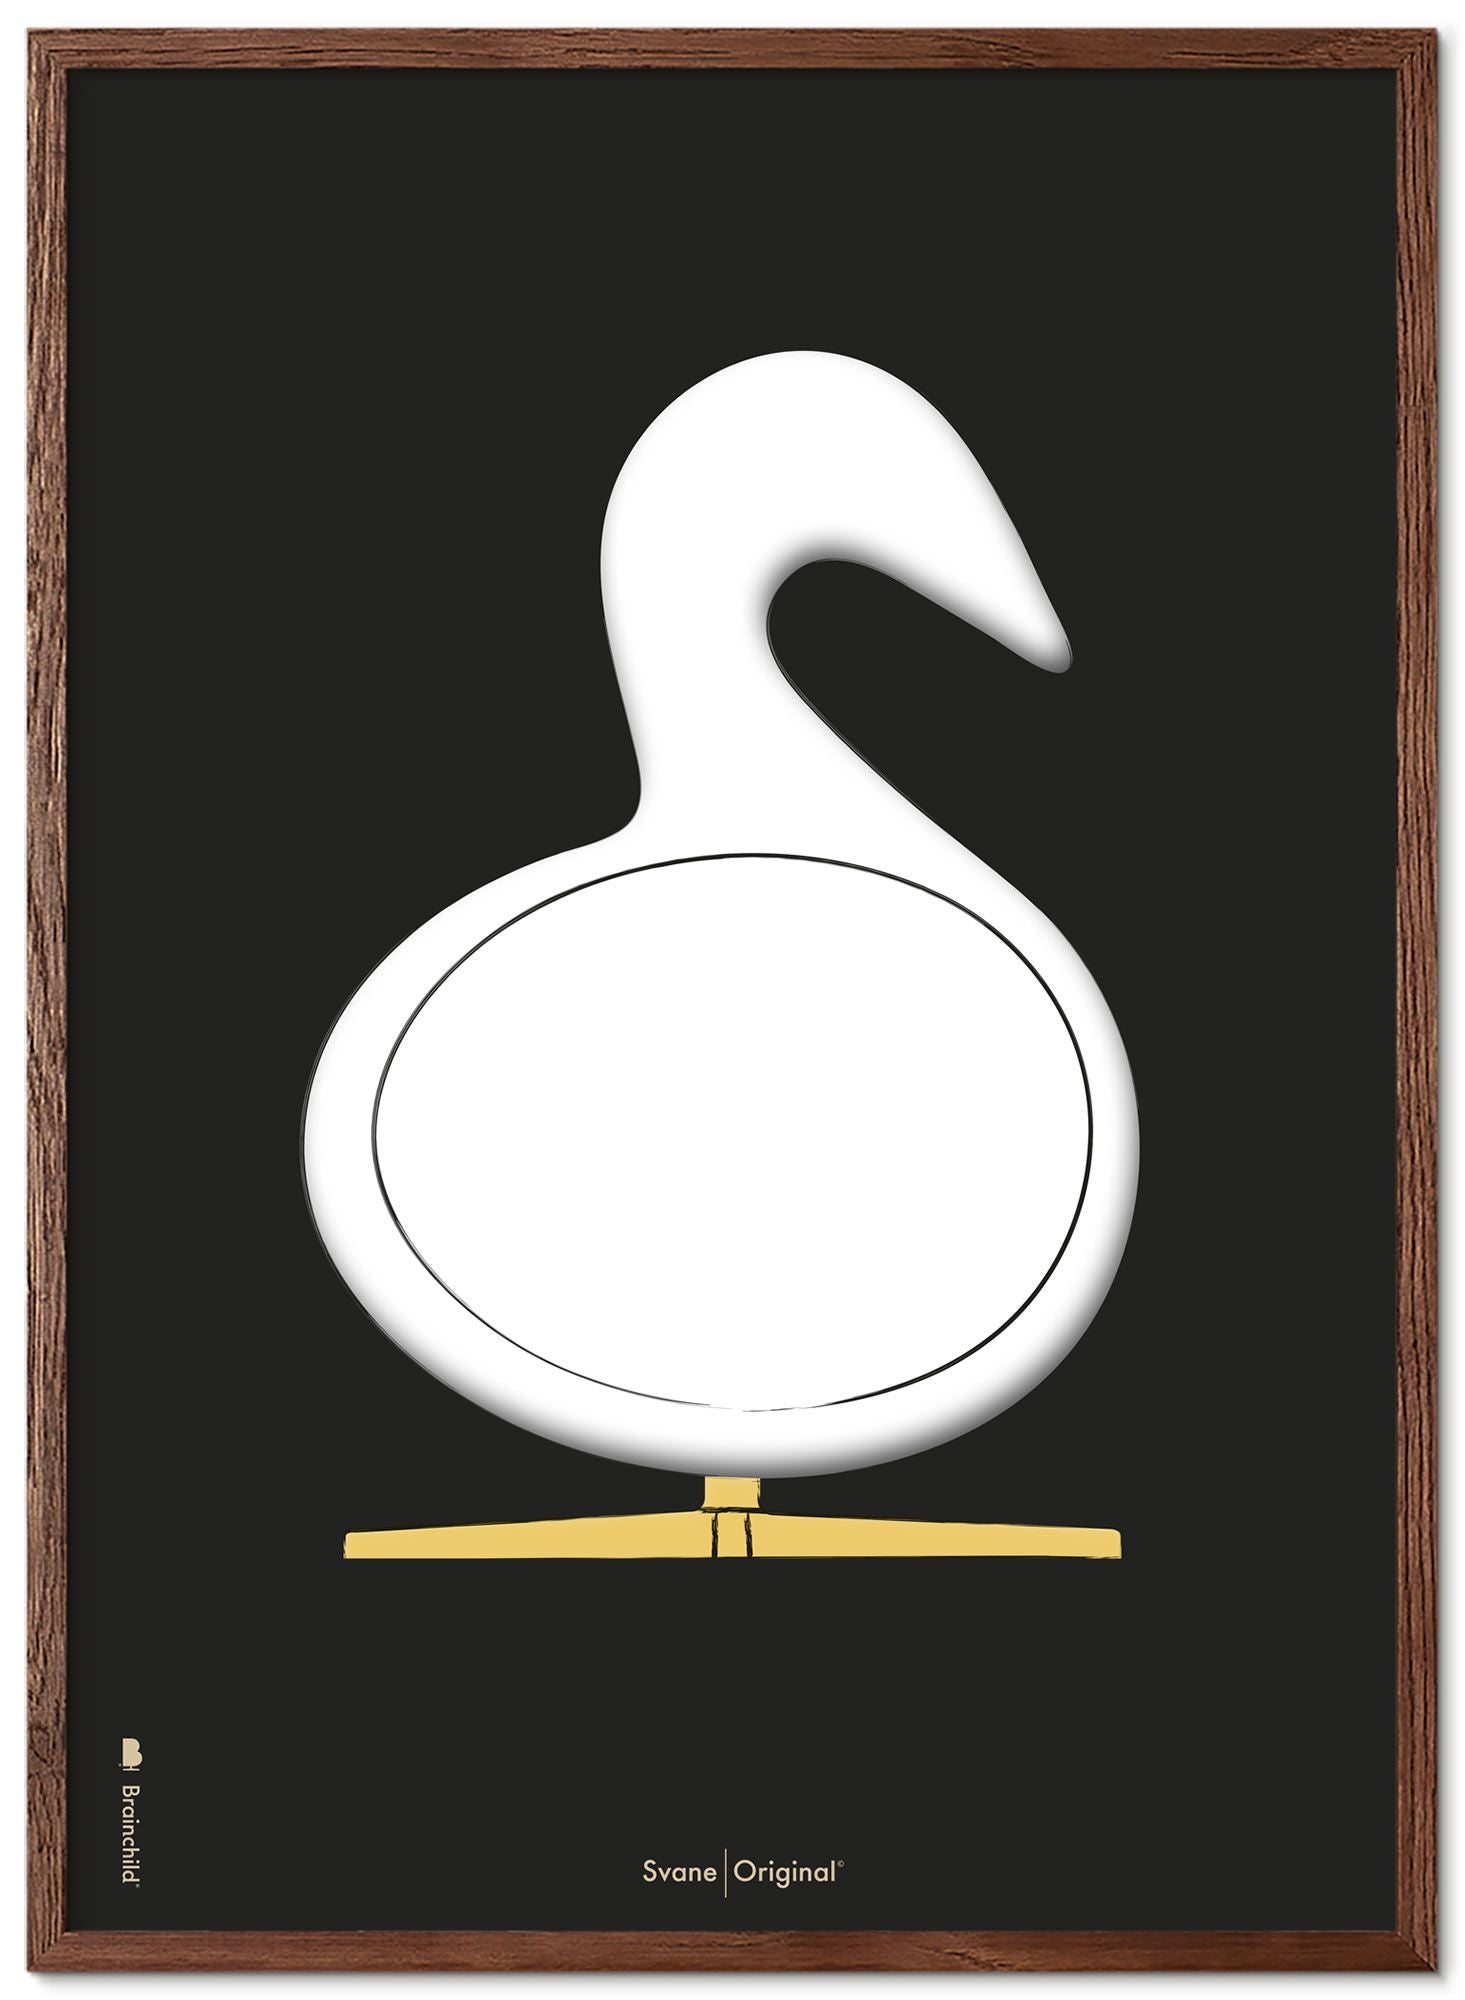 Brainchild Swan Design Sketch Poster Frame Made Of Dark Wood 50x70 Cm, Black Background